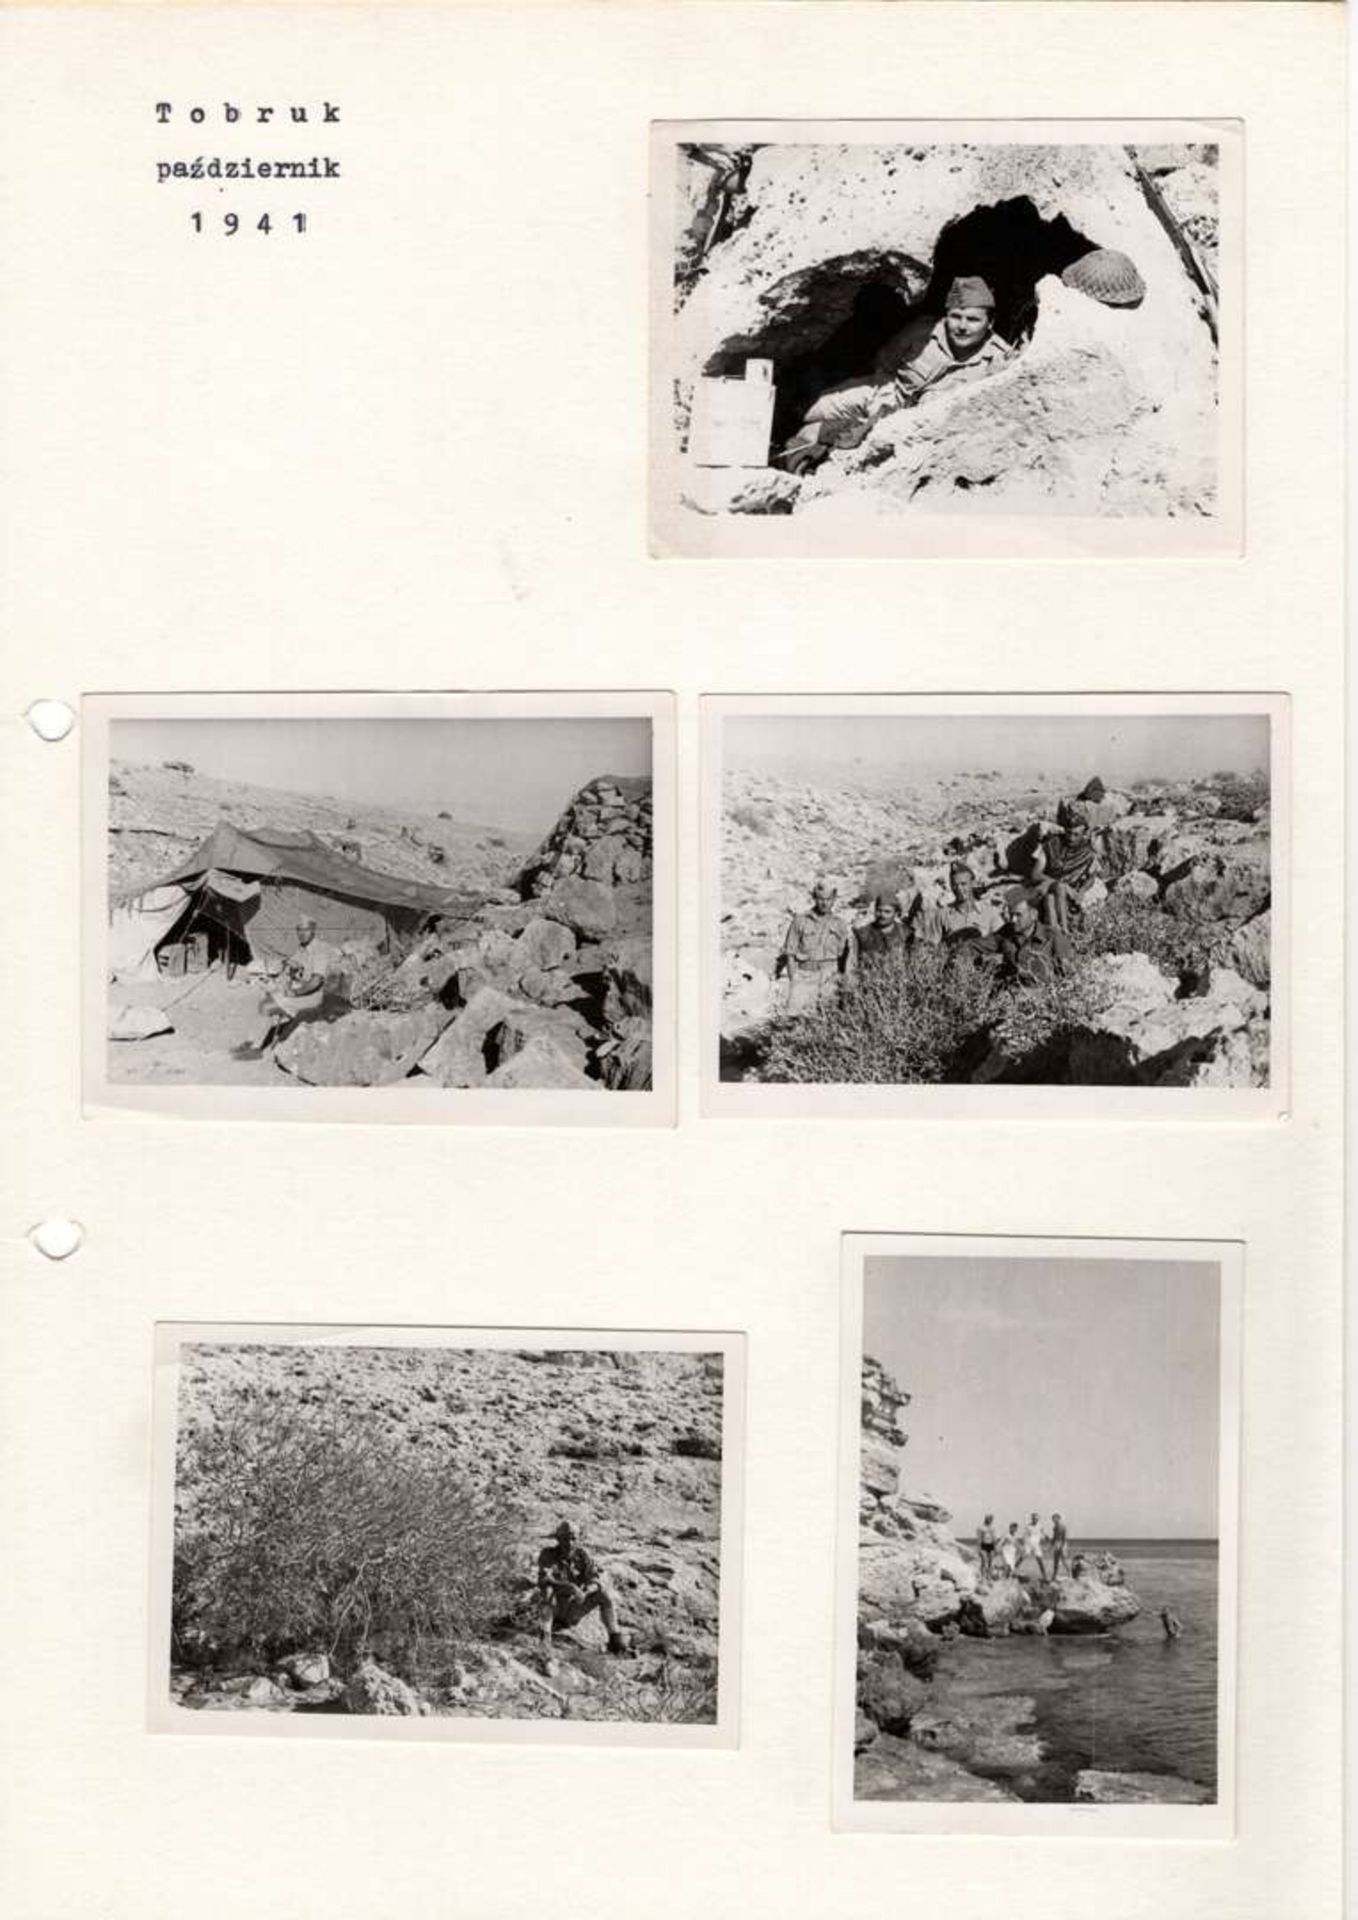 WW2 Polish photo of Fortified positions Tobruk. Photos - Tobruk October 1941